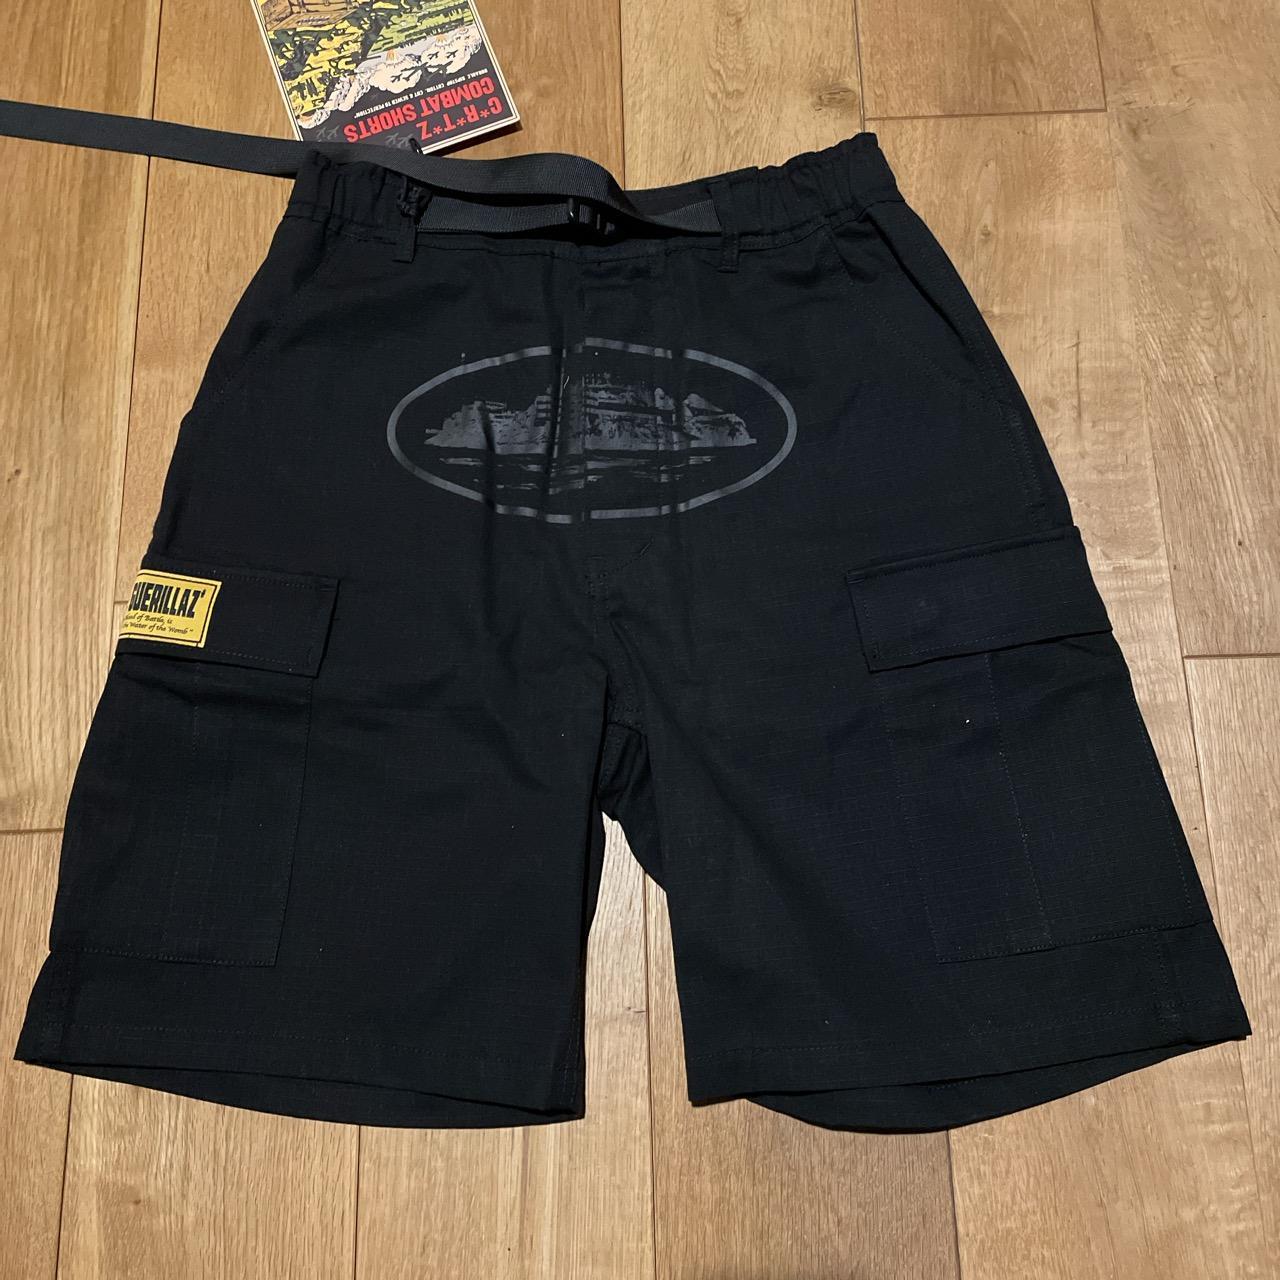 Corteiz Black Cargo Shorts (S) HAVE PROOF OF... - Depop